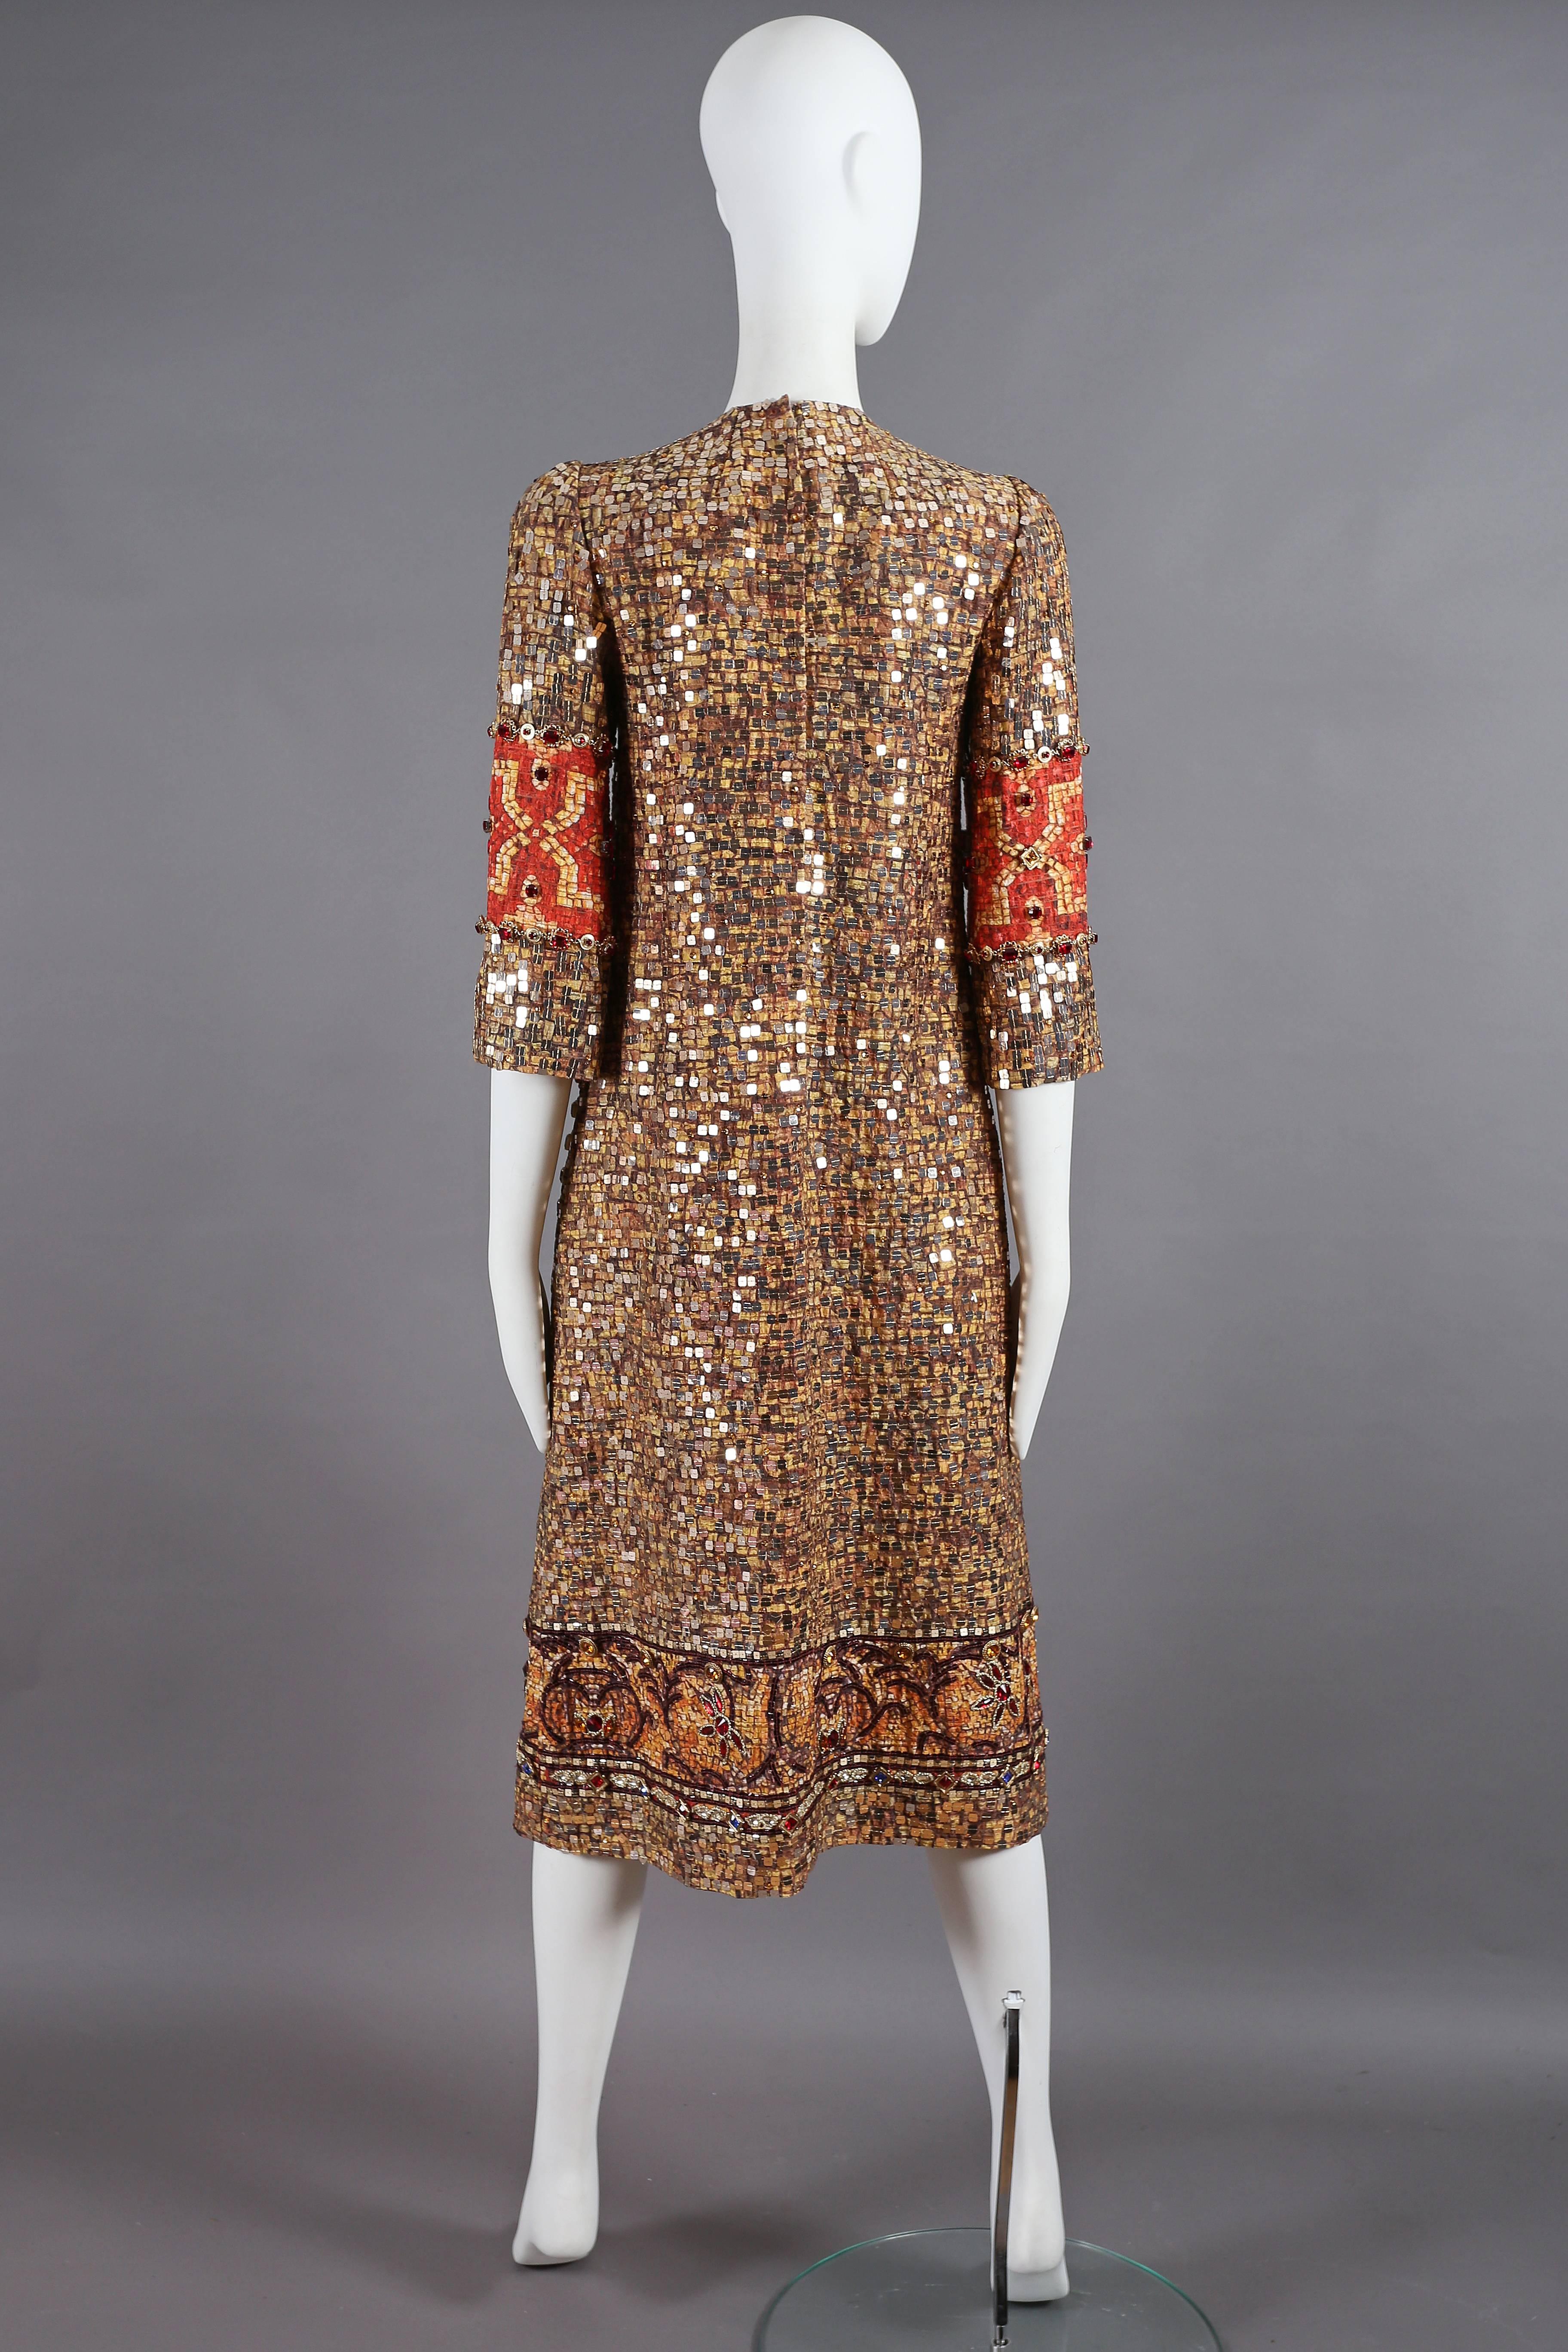 Dolce & Gabbana mosaic embellished shift dress, circa 2013 1